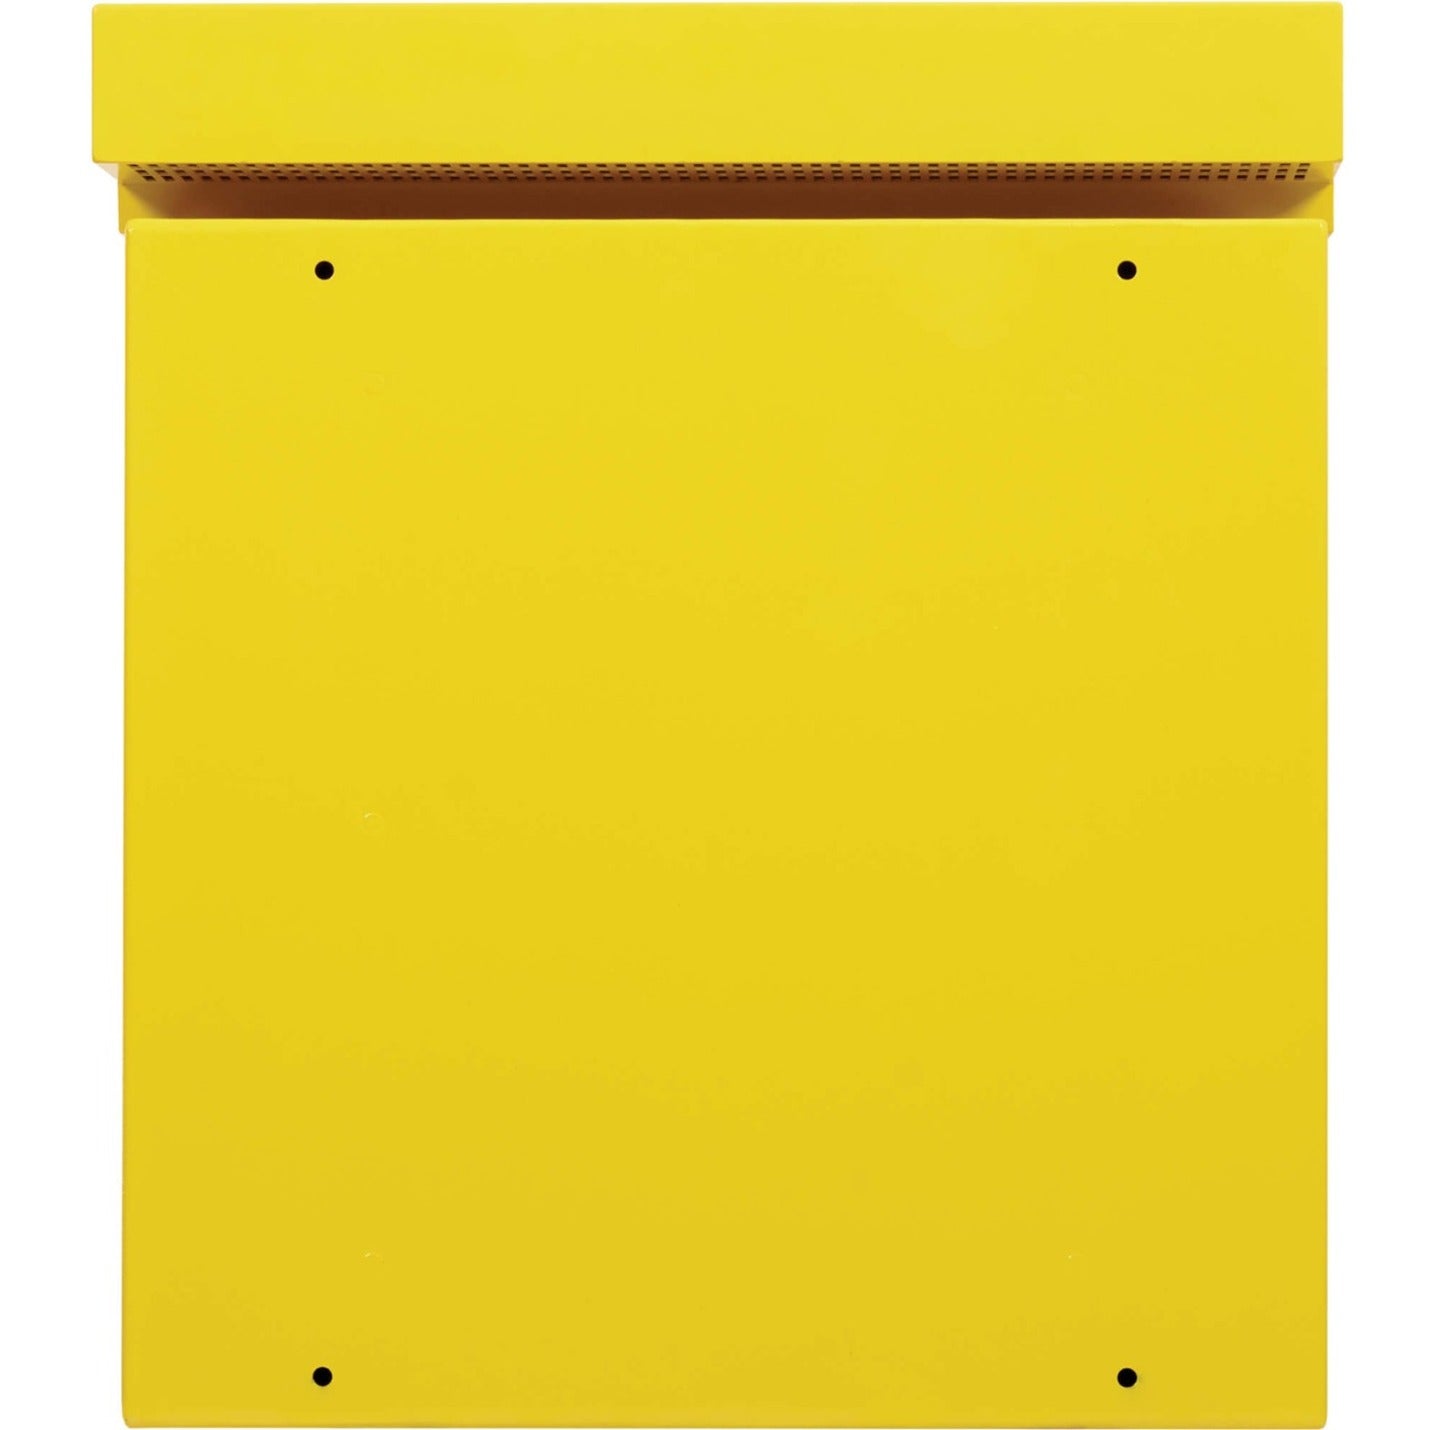 Tripp Lite SRN3RY12U Industrial Enclosure, 12U Rack Mount Enclosure, Yellow, Moisture Resistant, Snow Resistant, Lockable Door